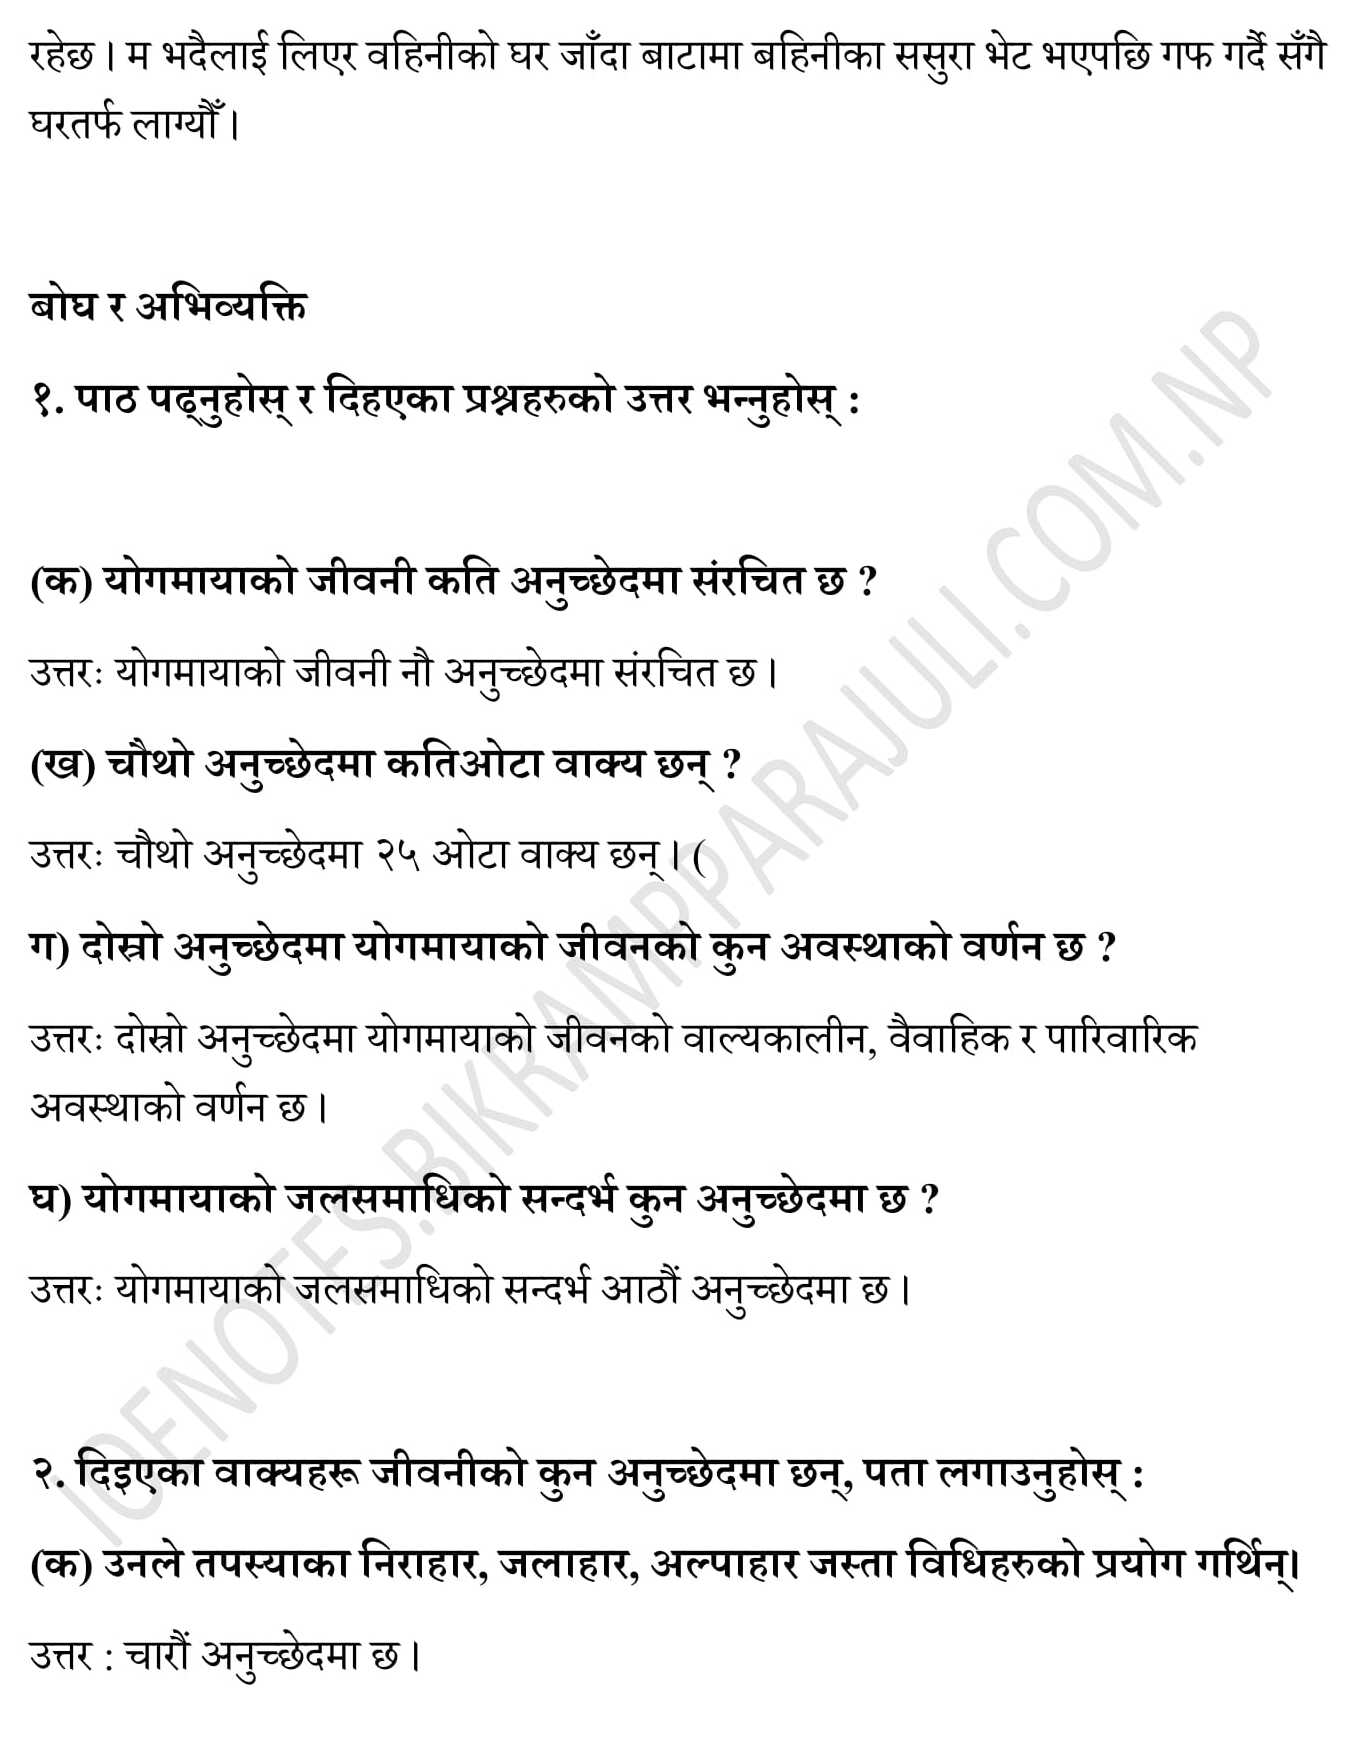 yogmaya class 11 pdf